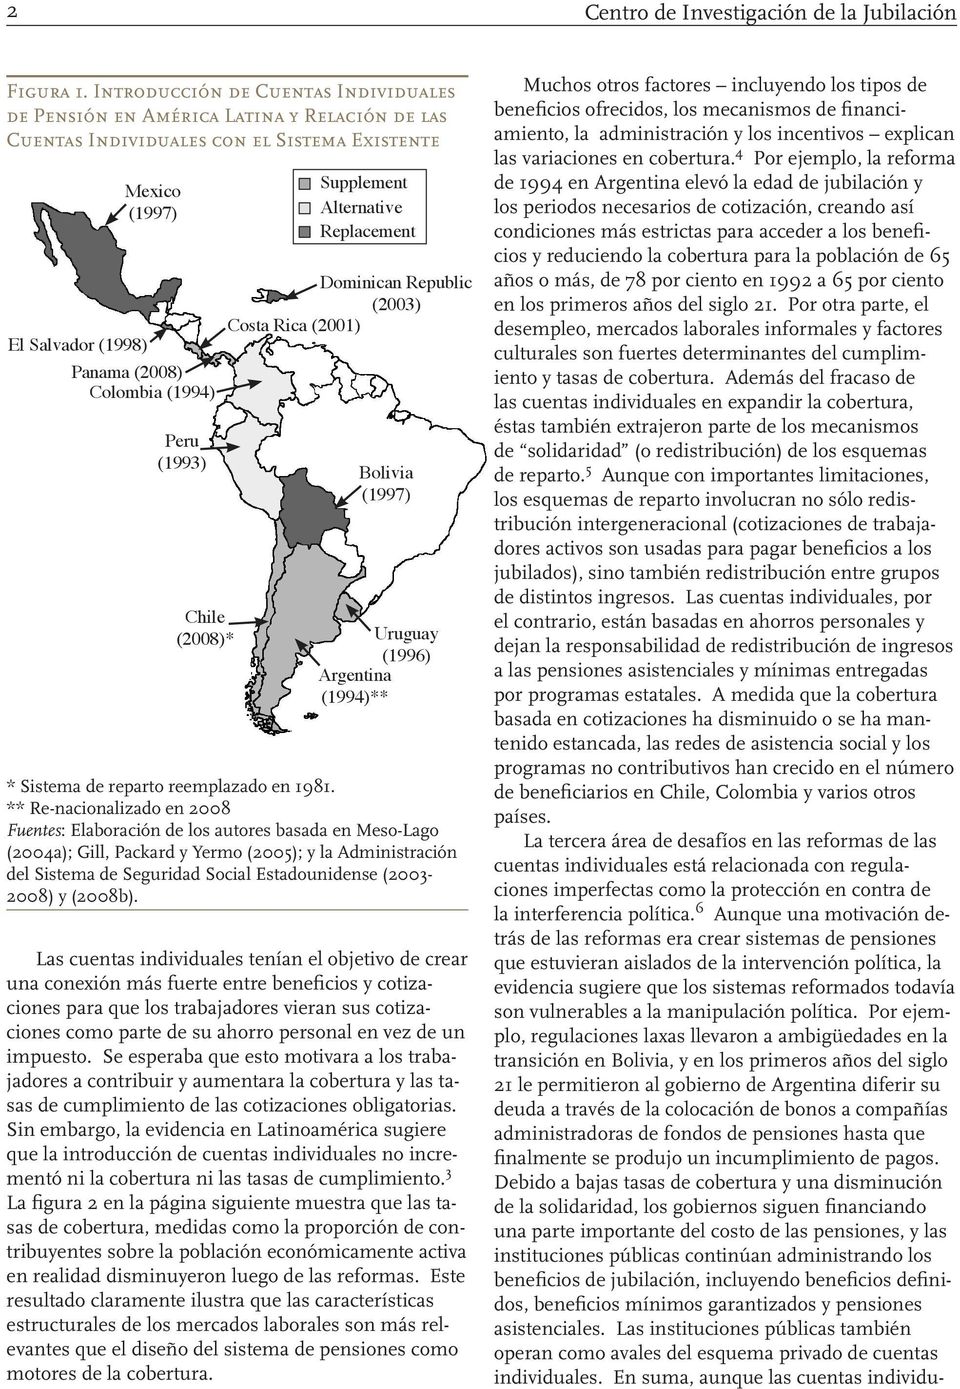 Supplement Alternative Replacement Dominican Republic (2003) Costa Rica (2001) Bolivia (1997) Uruguay (1996) Argentina (1994)** * Sistema de reparto reemplazado en 1981.